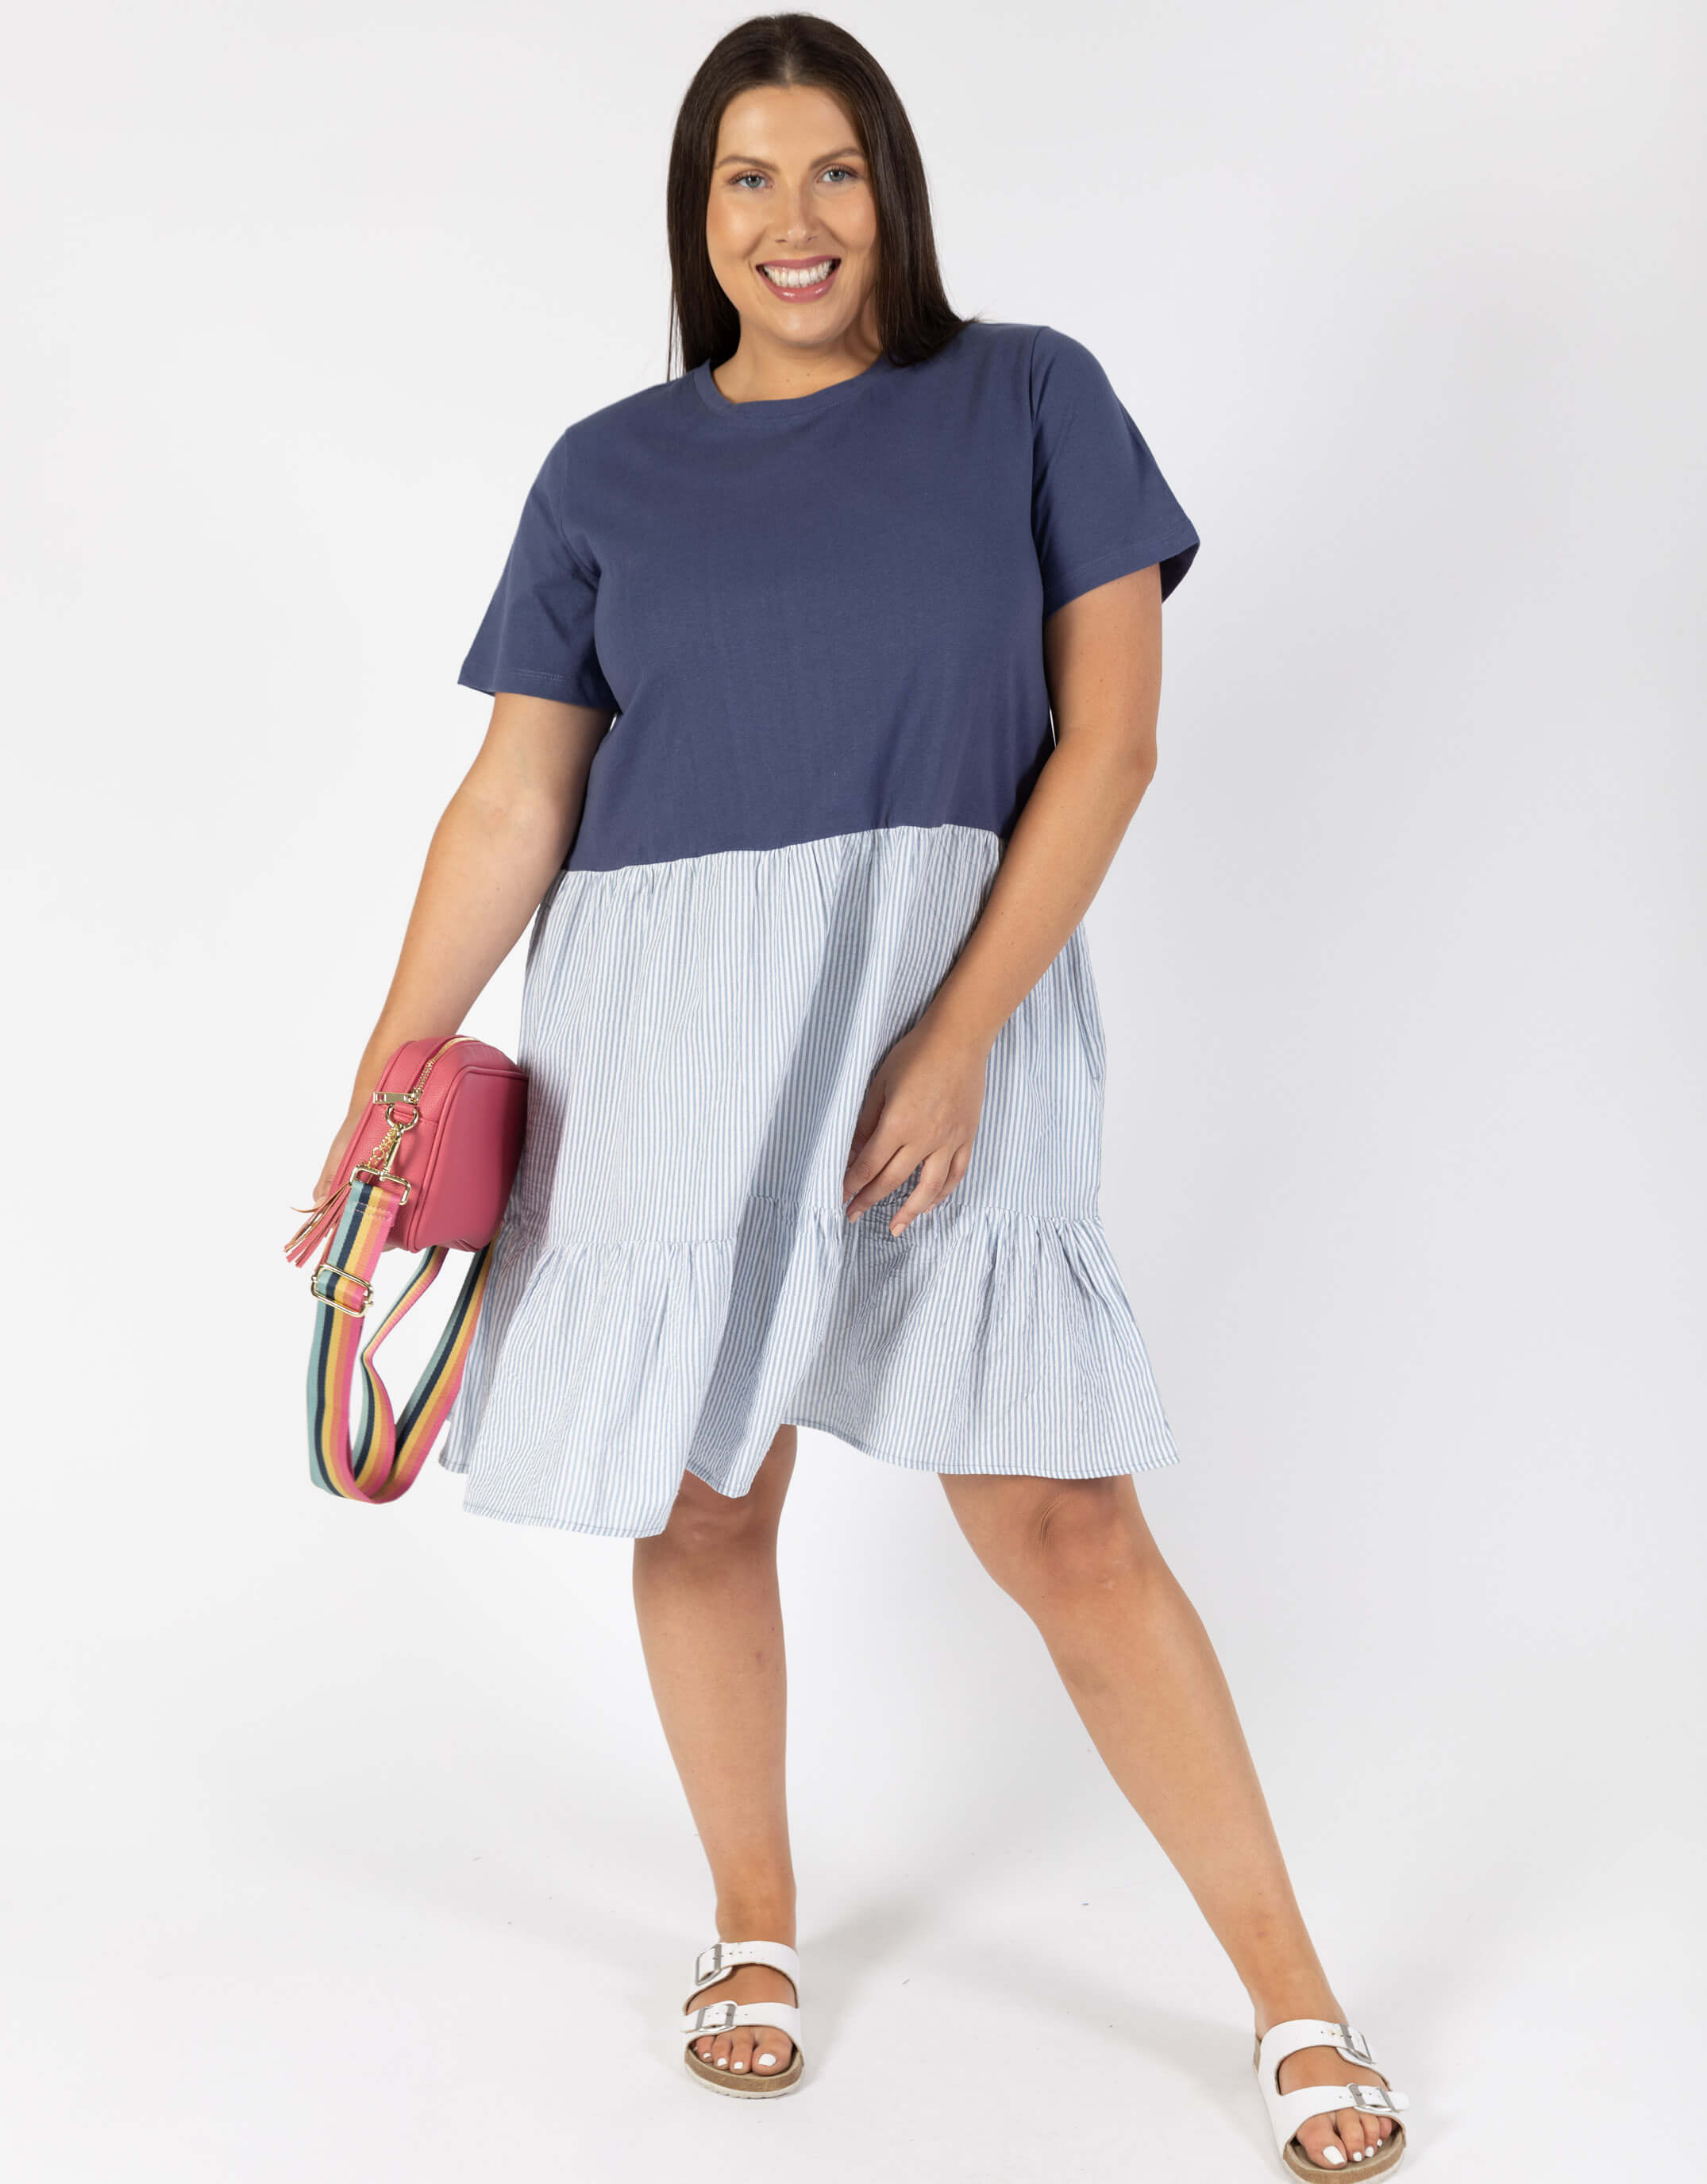 Plus Size Matilda Stripe Dress - Ocean Blue/White Stripe